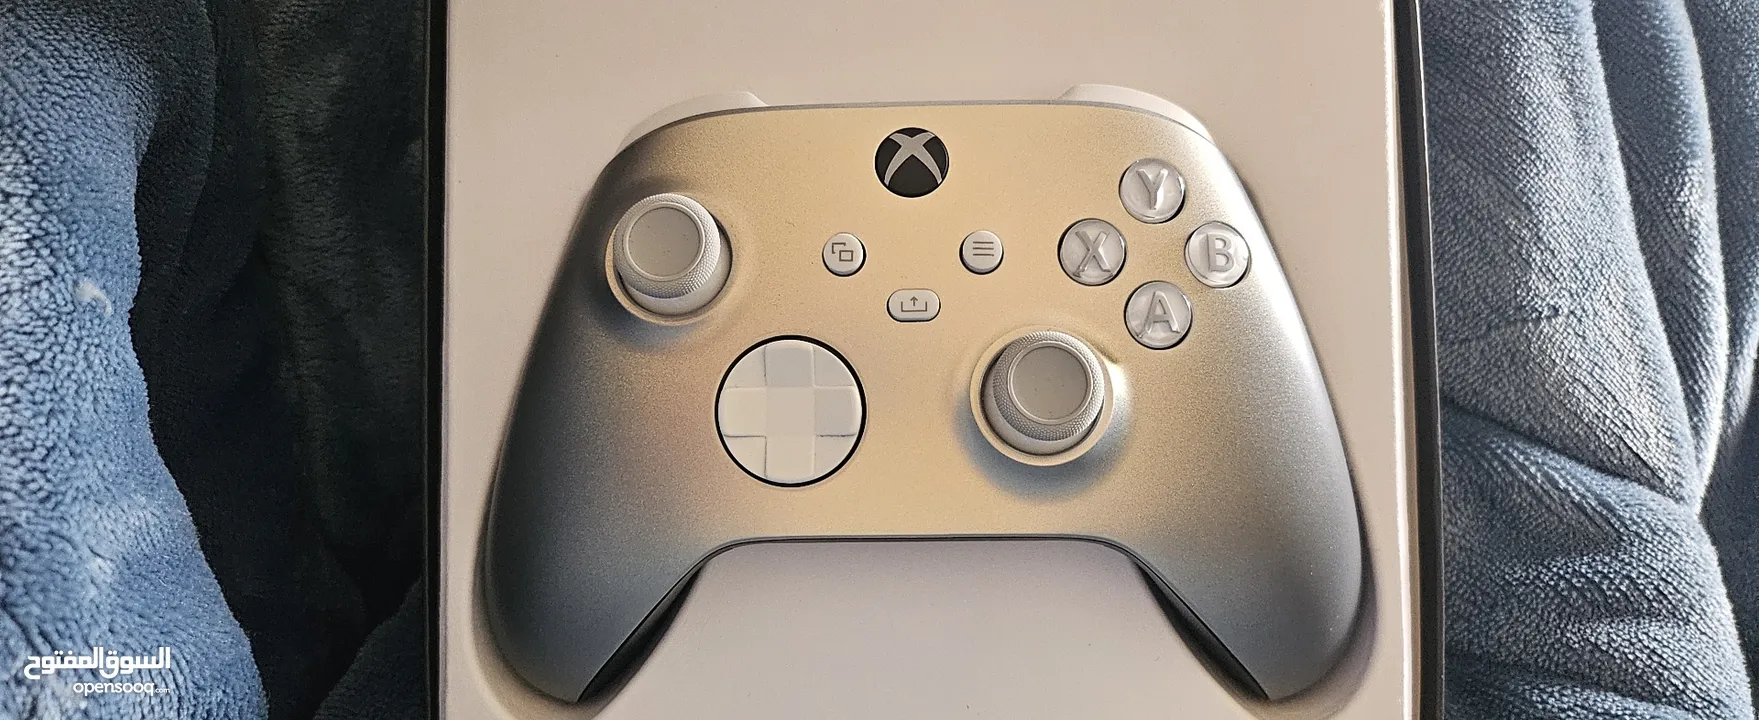 يد اكس بوكس Xbox Controller Lunar Shift